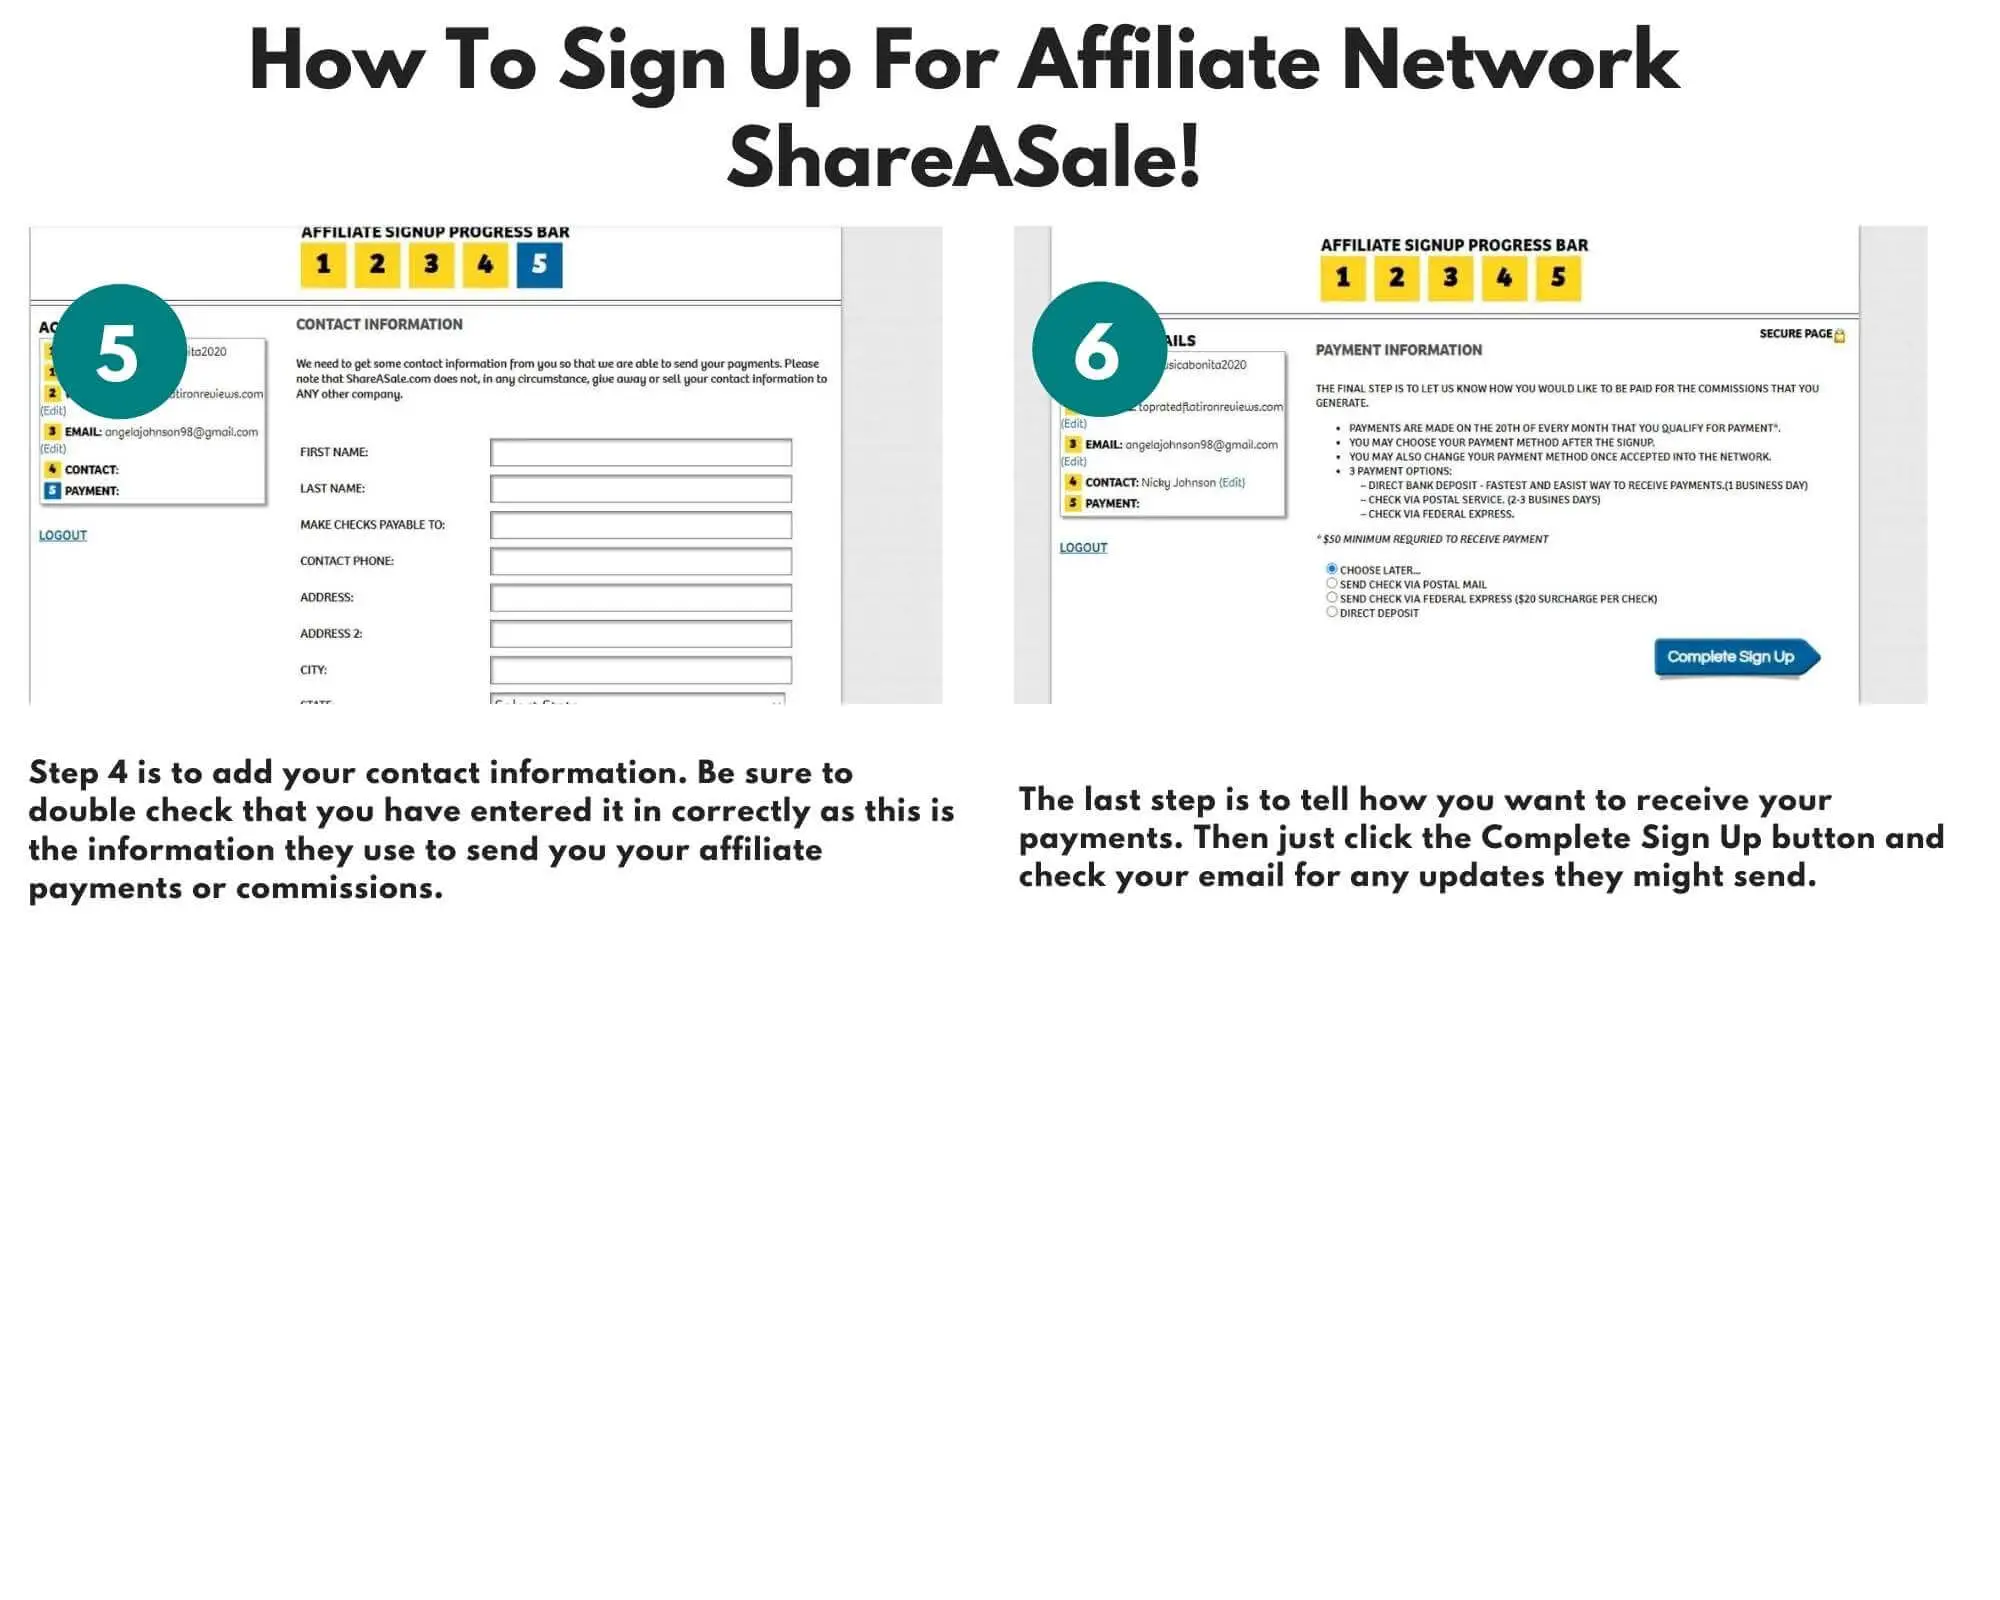 shareasale affiliate network signup screenshot